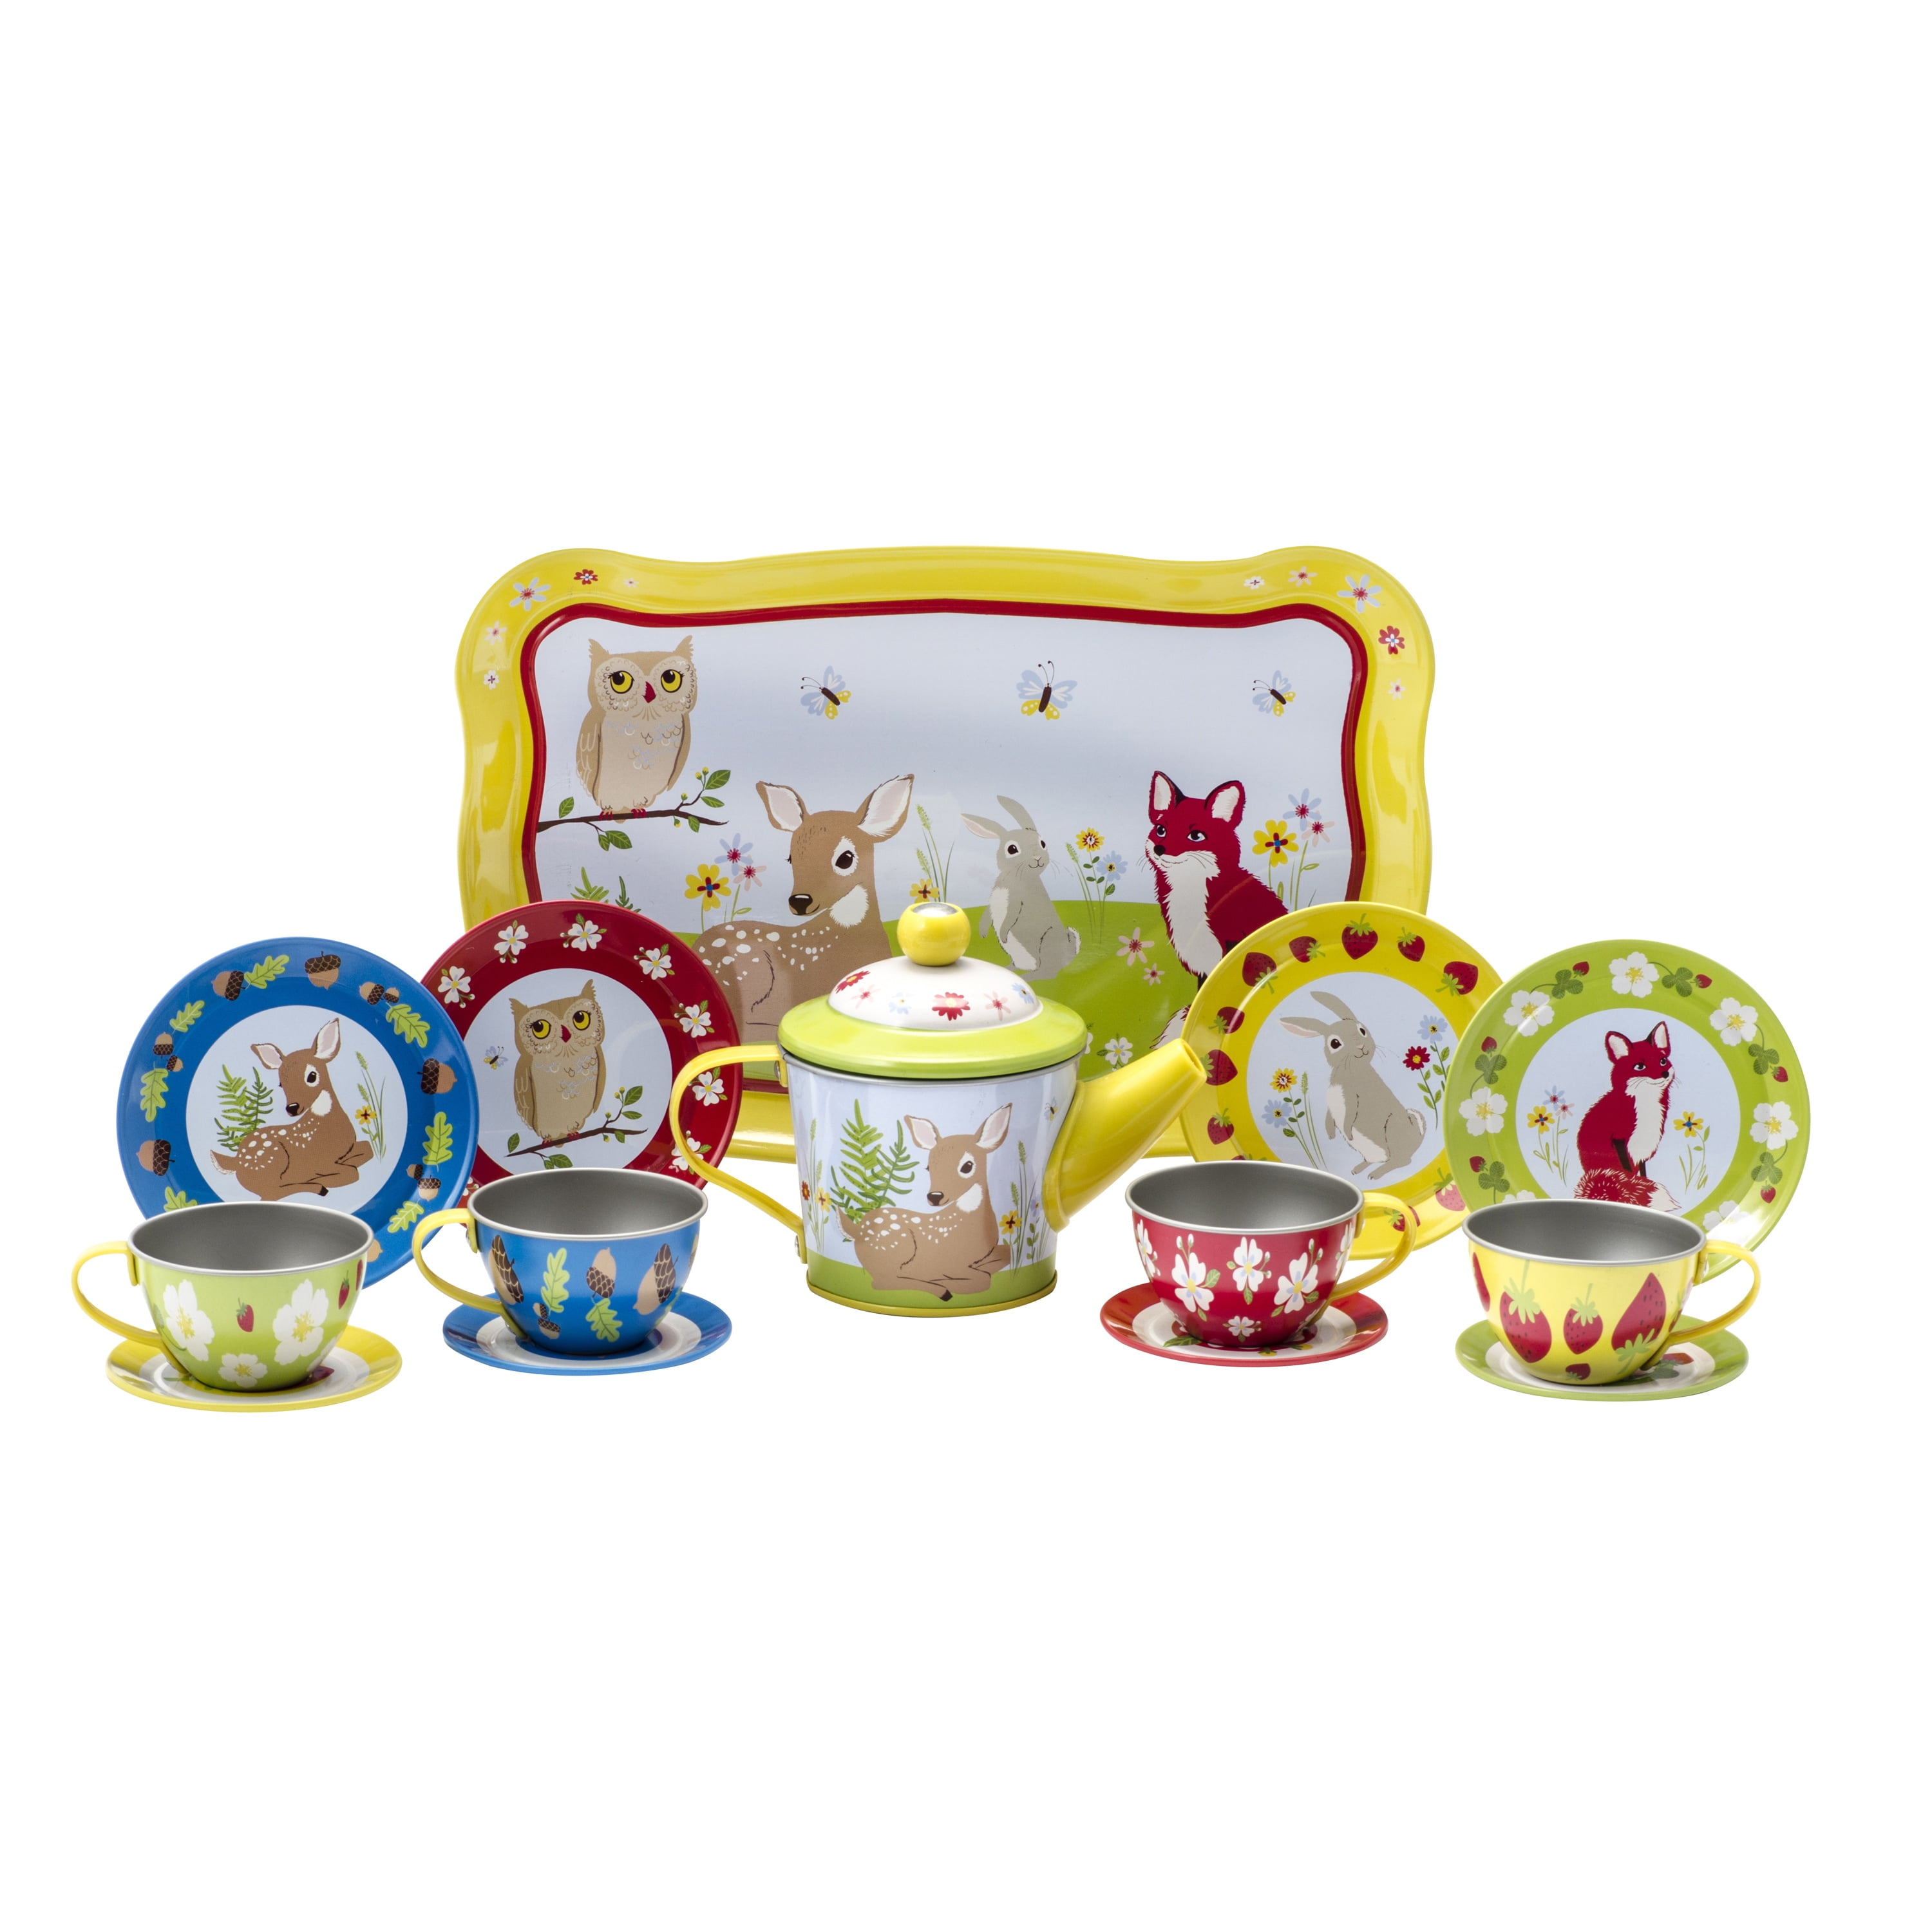 Schylling Cupcakes Tin Tea Set 696749257791 for sale online 